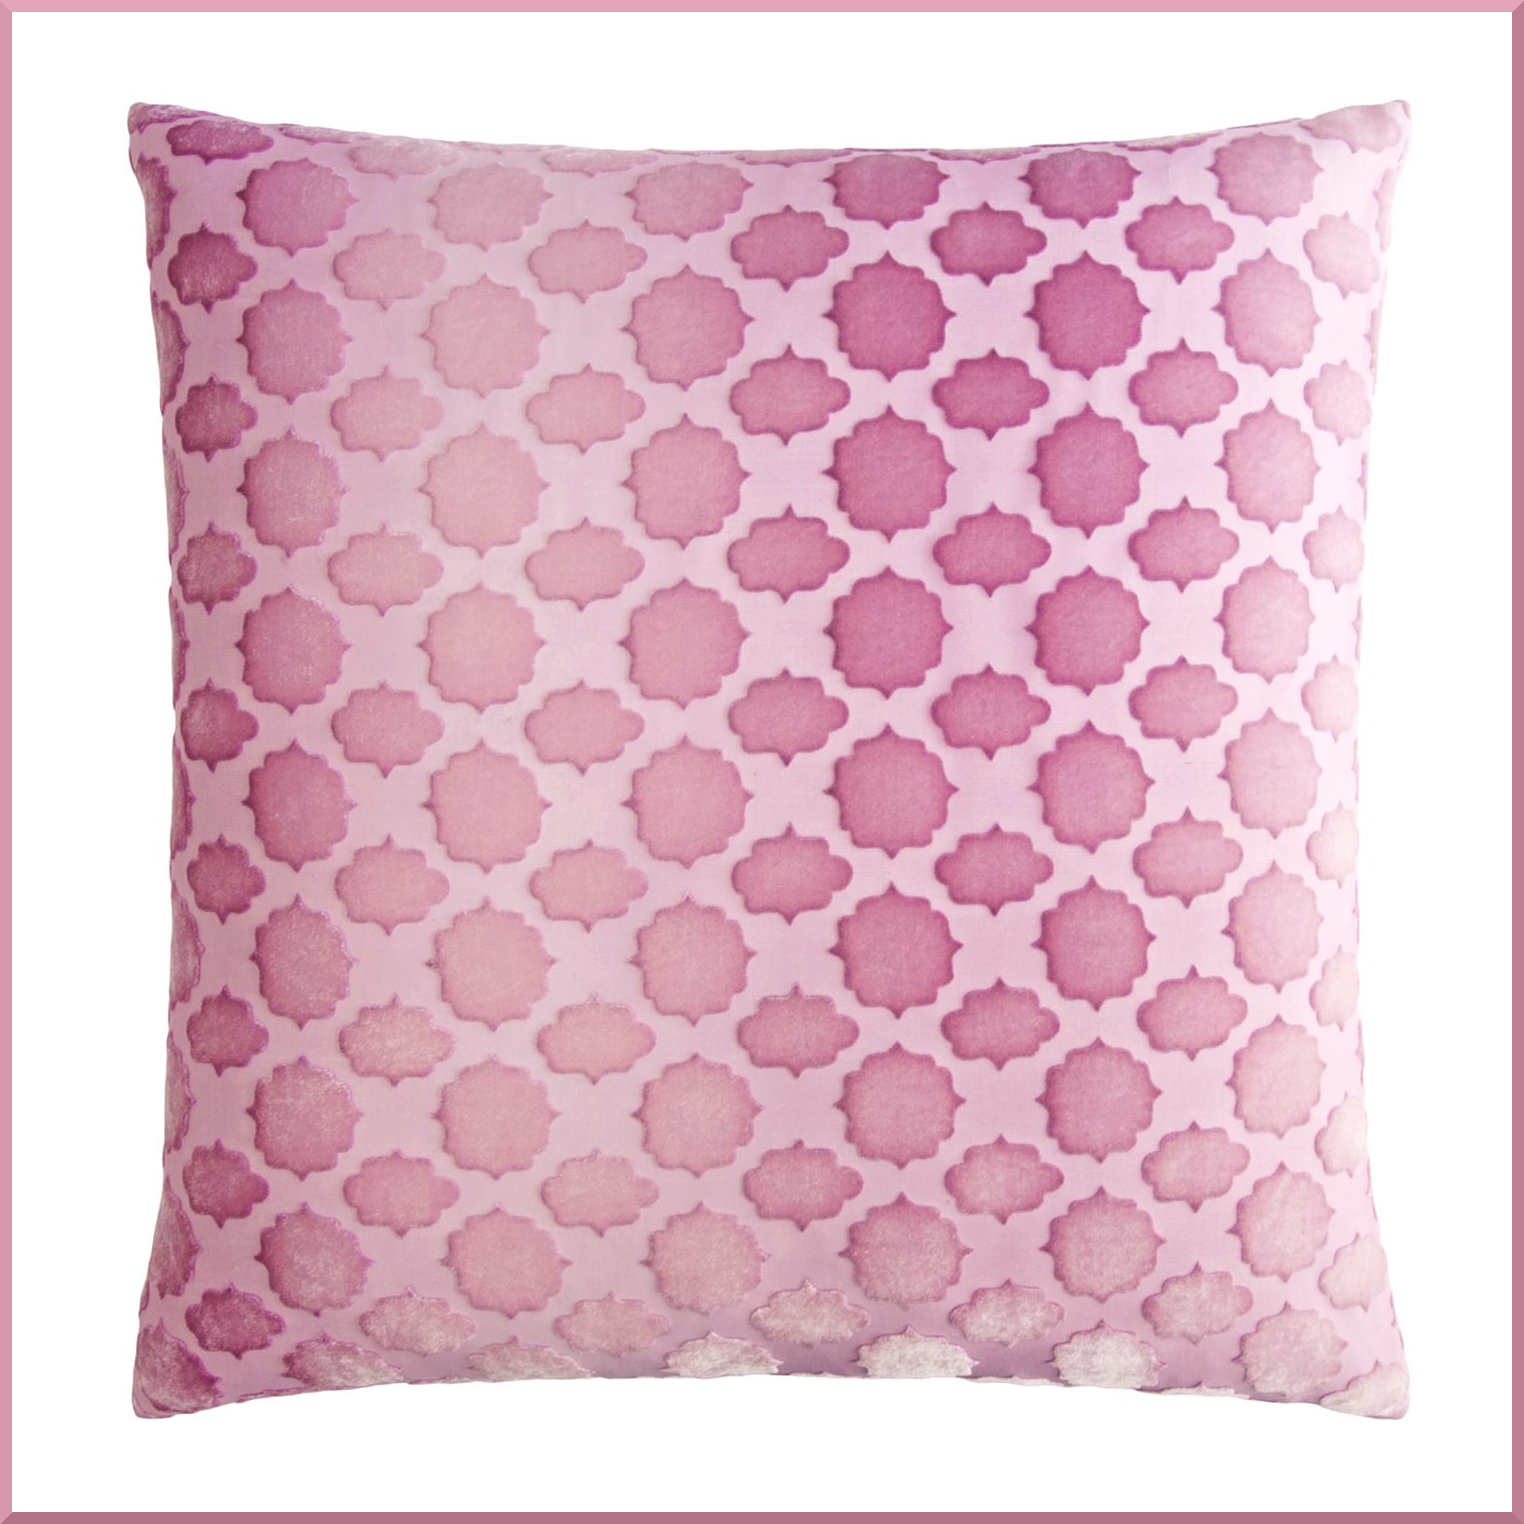 Kevin OBrien Studio Mod Fretwork Velvet Decorative Pillow